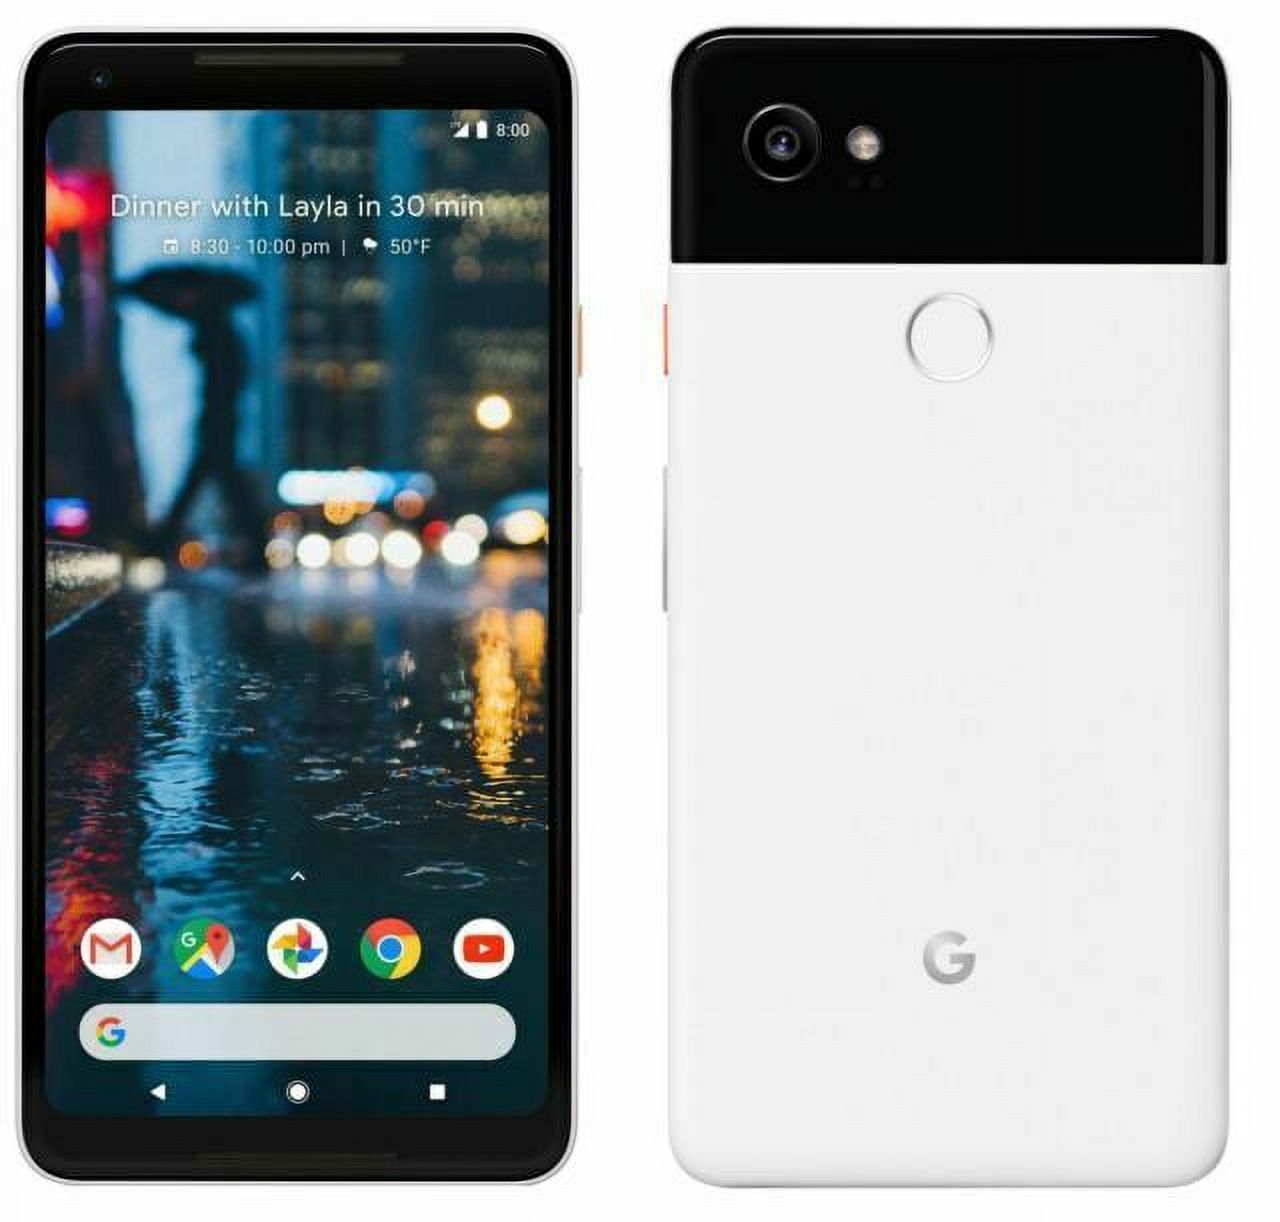 Google Pixel 2 XL Verizon - White & Black (128GB) - image 1 of 3